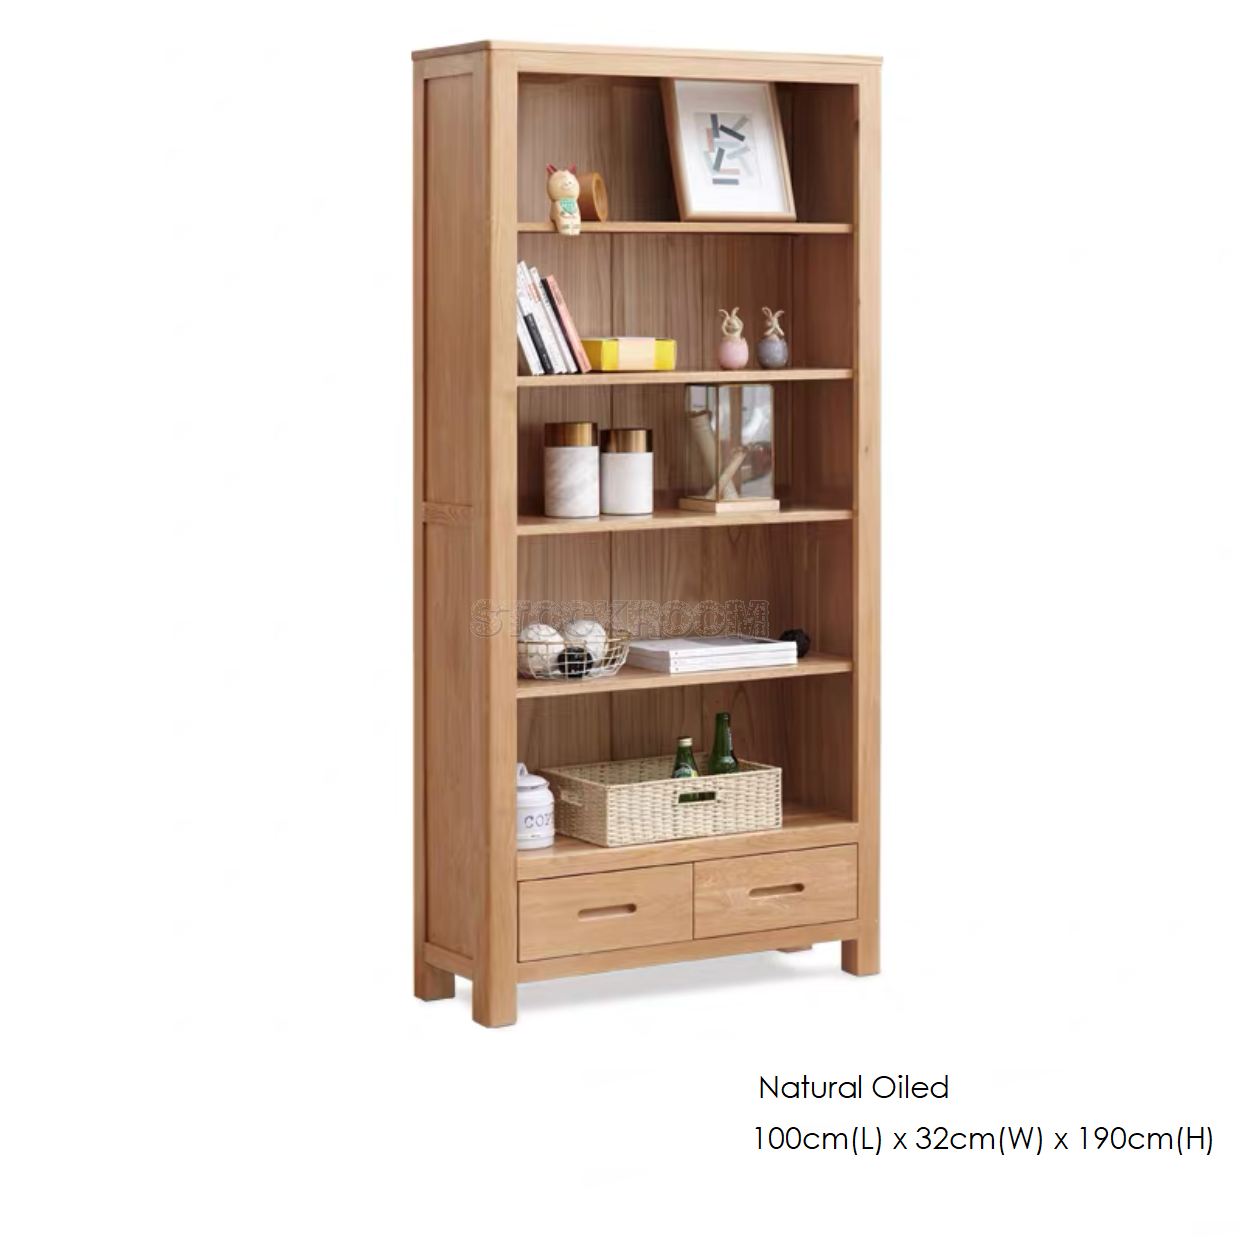 Winfrid Solid Oak Wood Bookshelves with Storage Unit